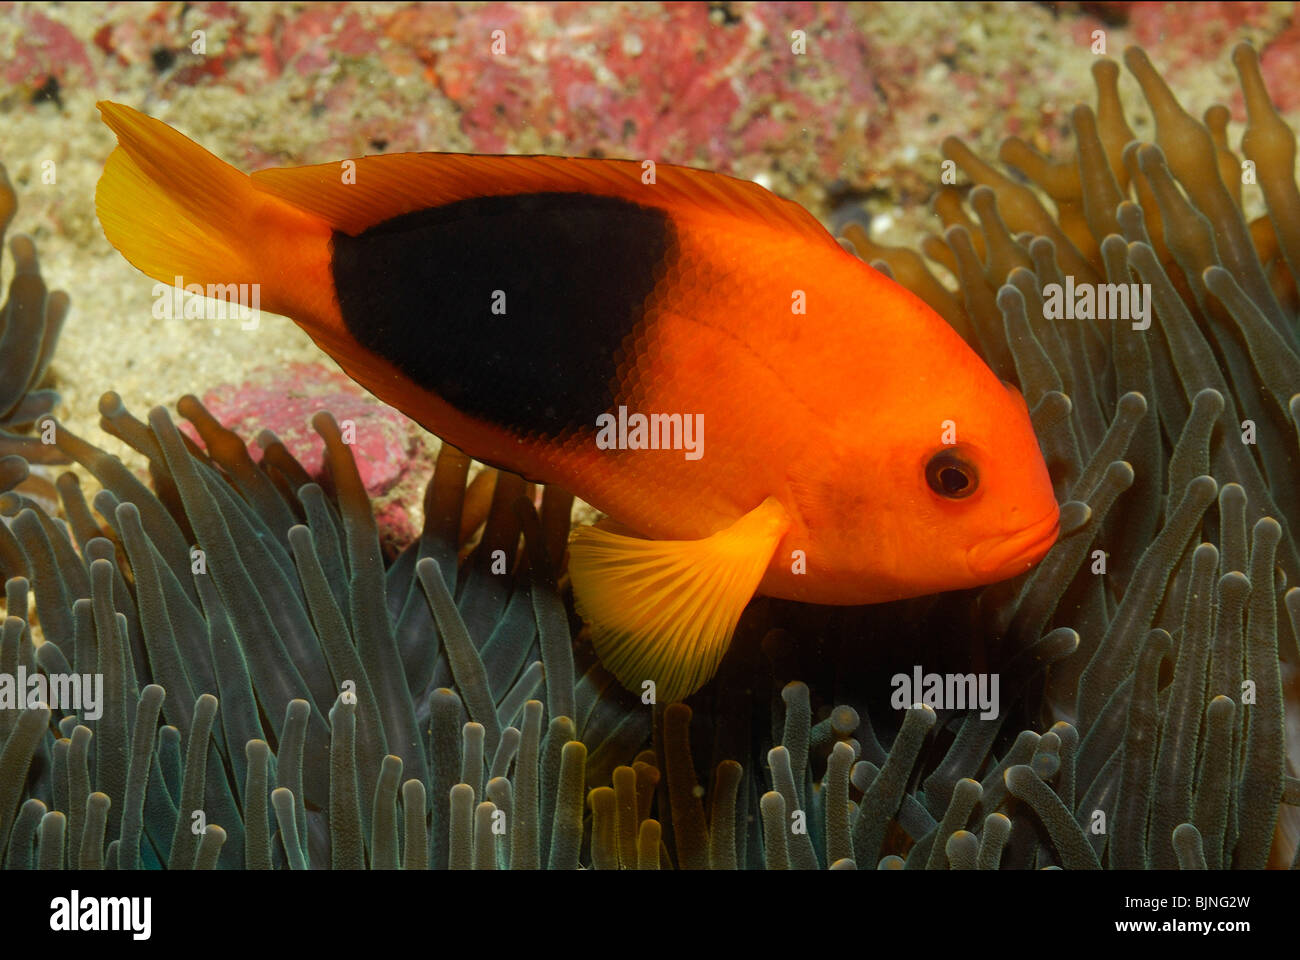 Tomato anemonefish in the Similan Islands, Andaman Sea Stock Photo